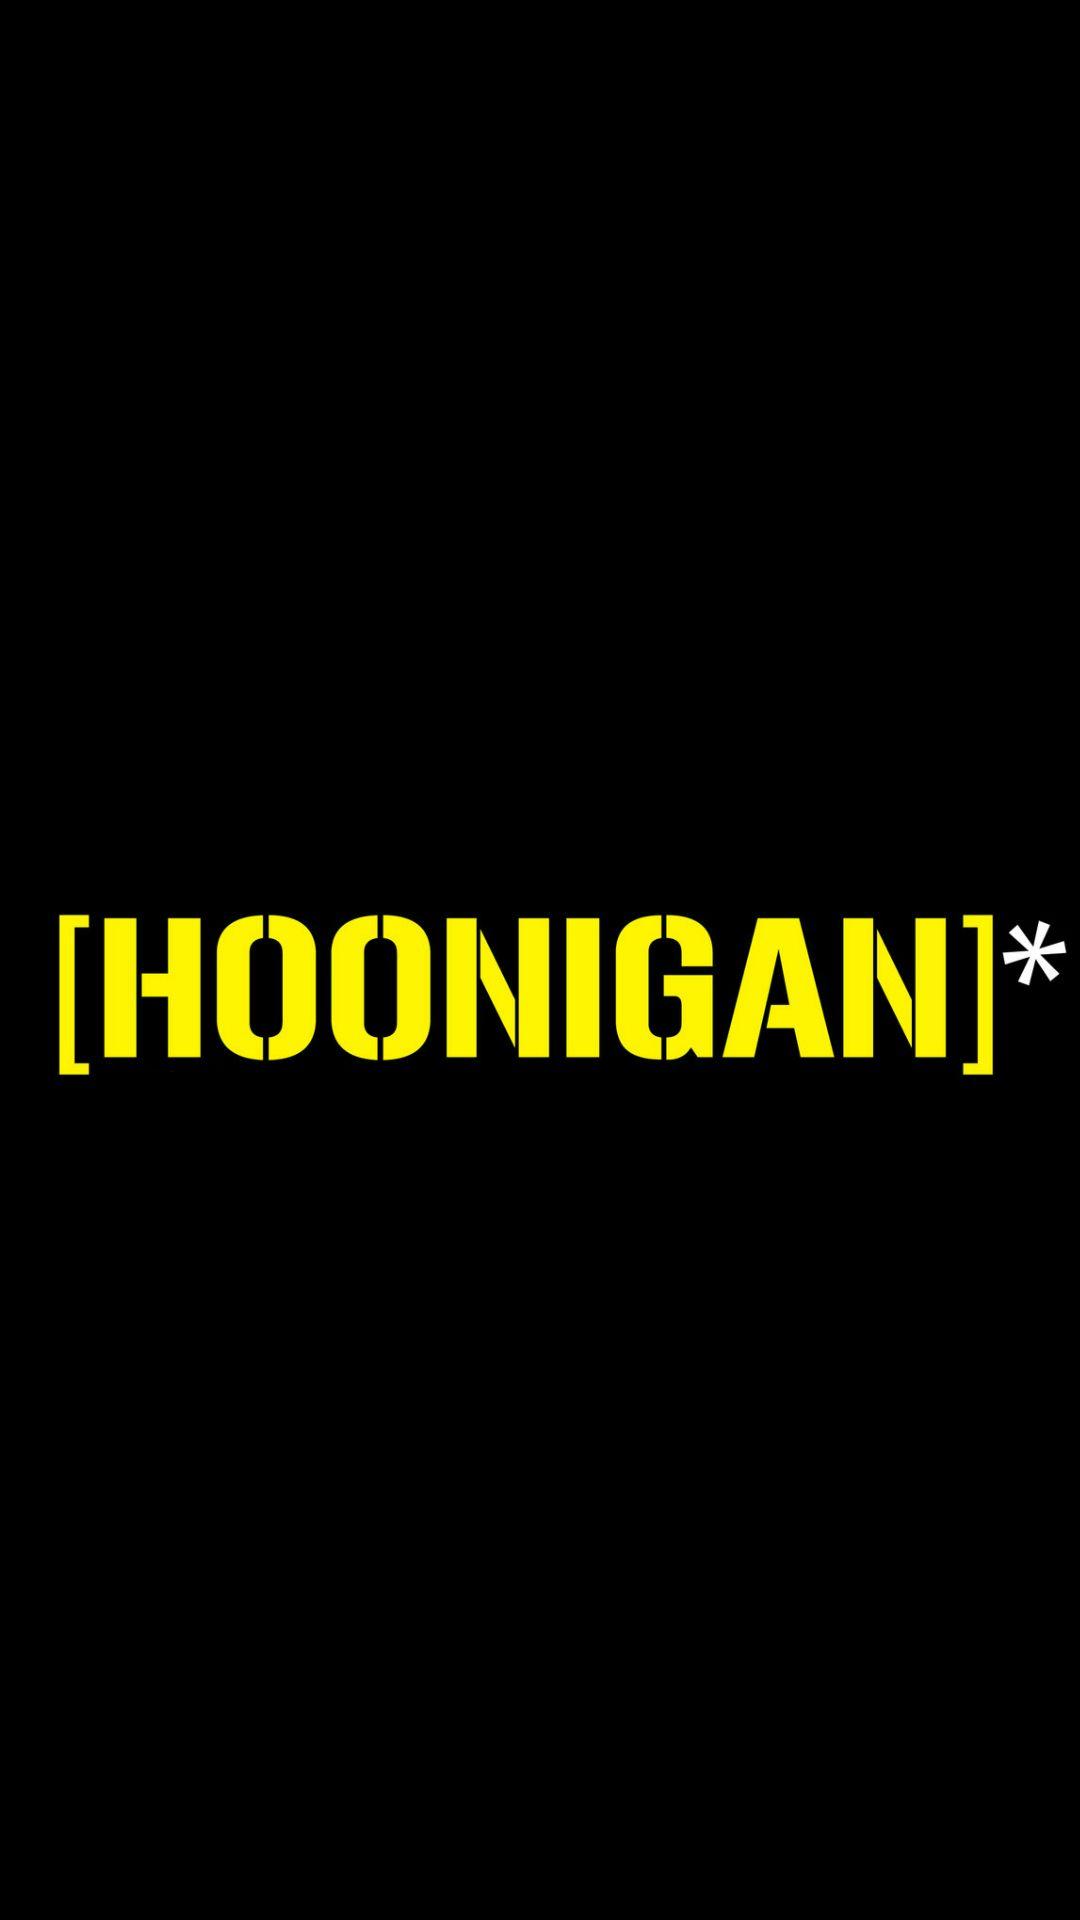 hoon #hoonigan. joa. Jdm, Cars and Wallpaper